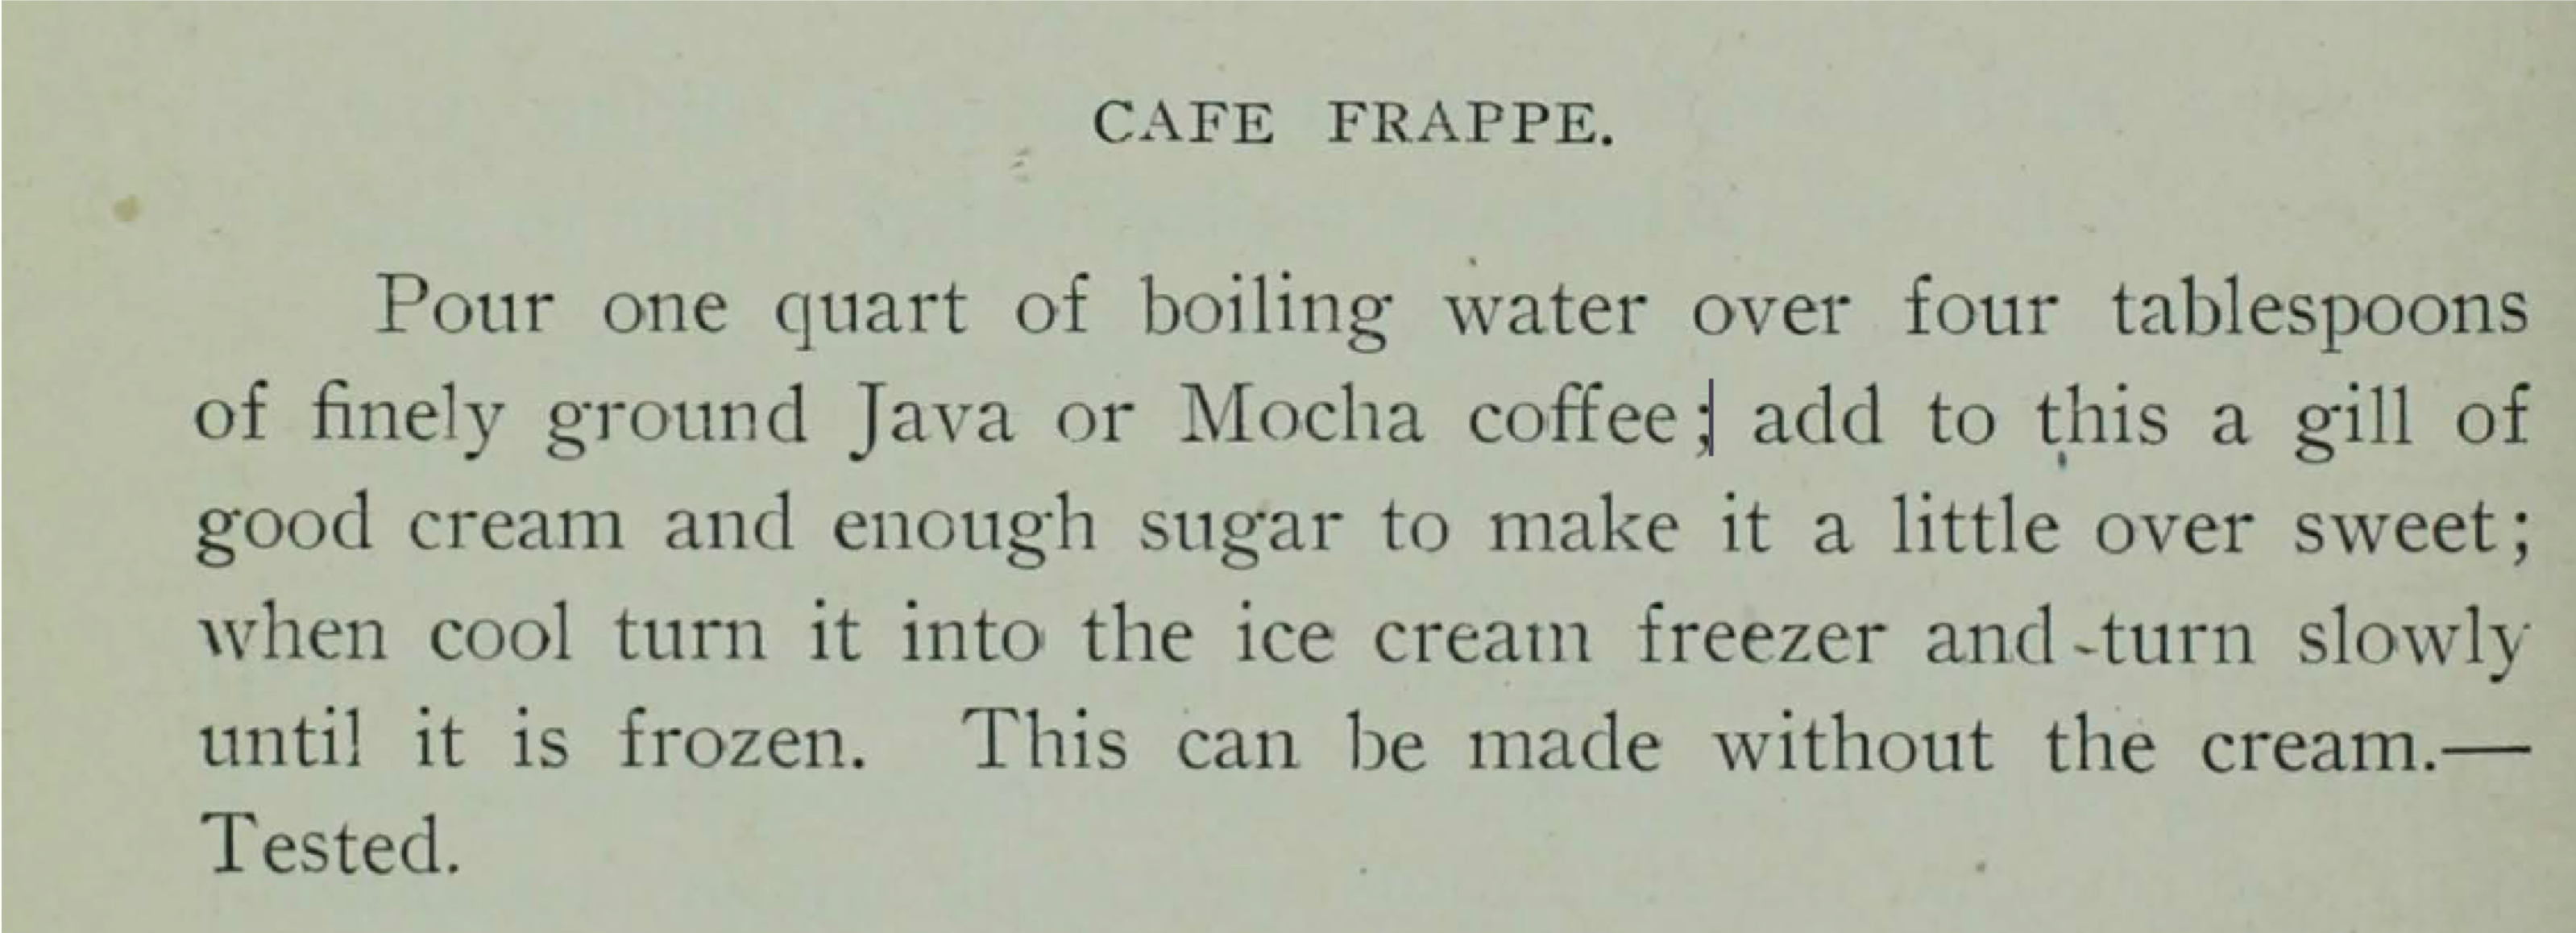 Cafe Frappe recipe